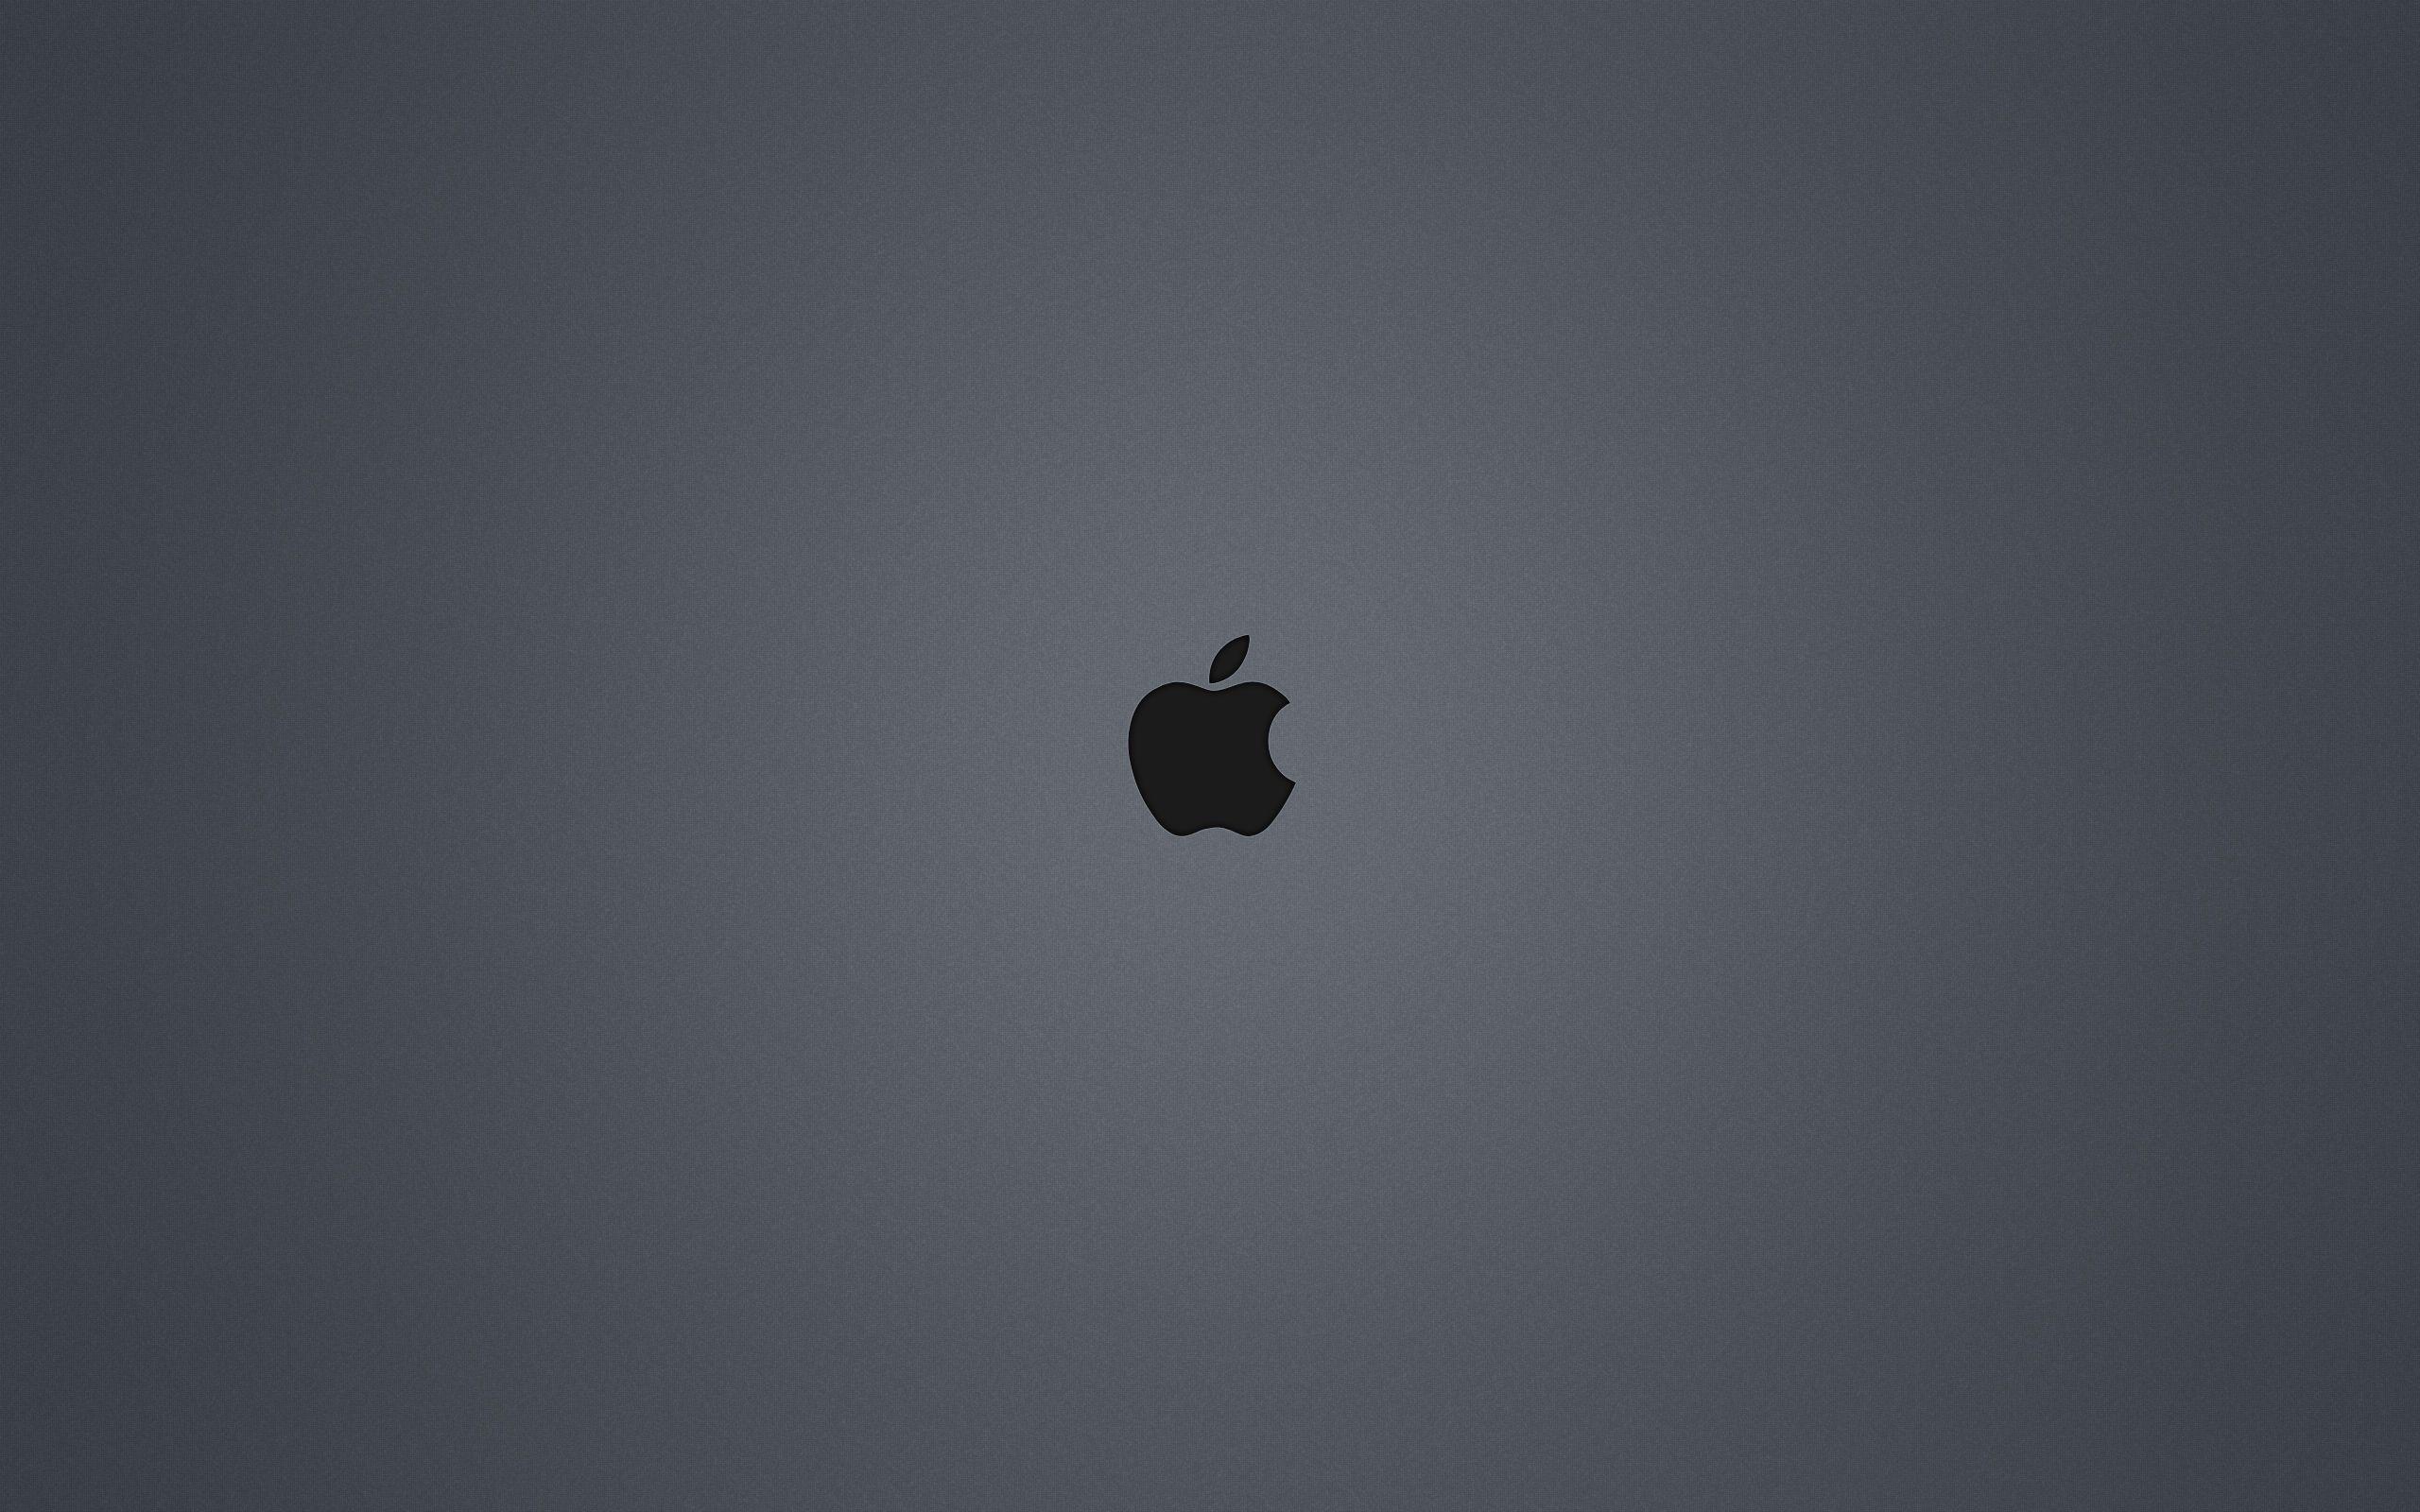 Apple Logo Wallpaper 23080 2560x1600 px